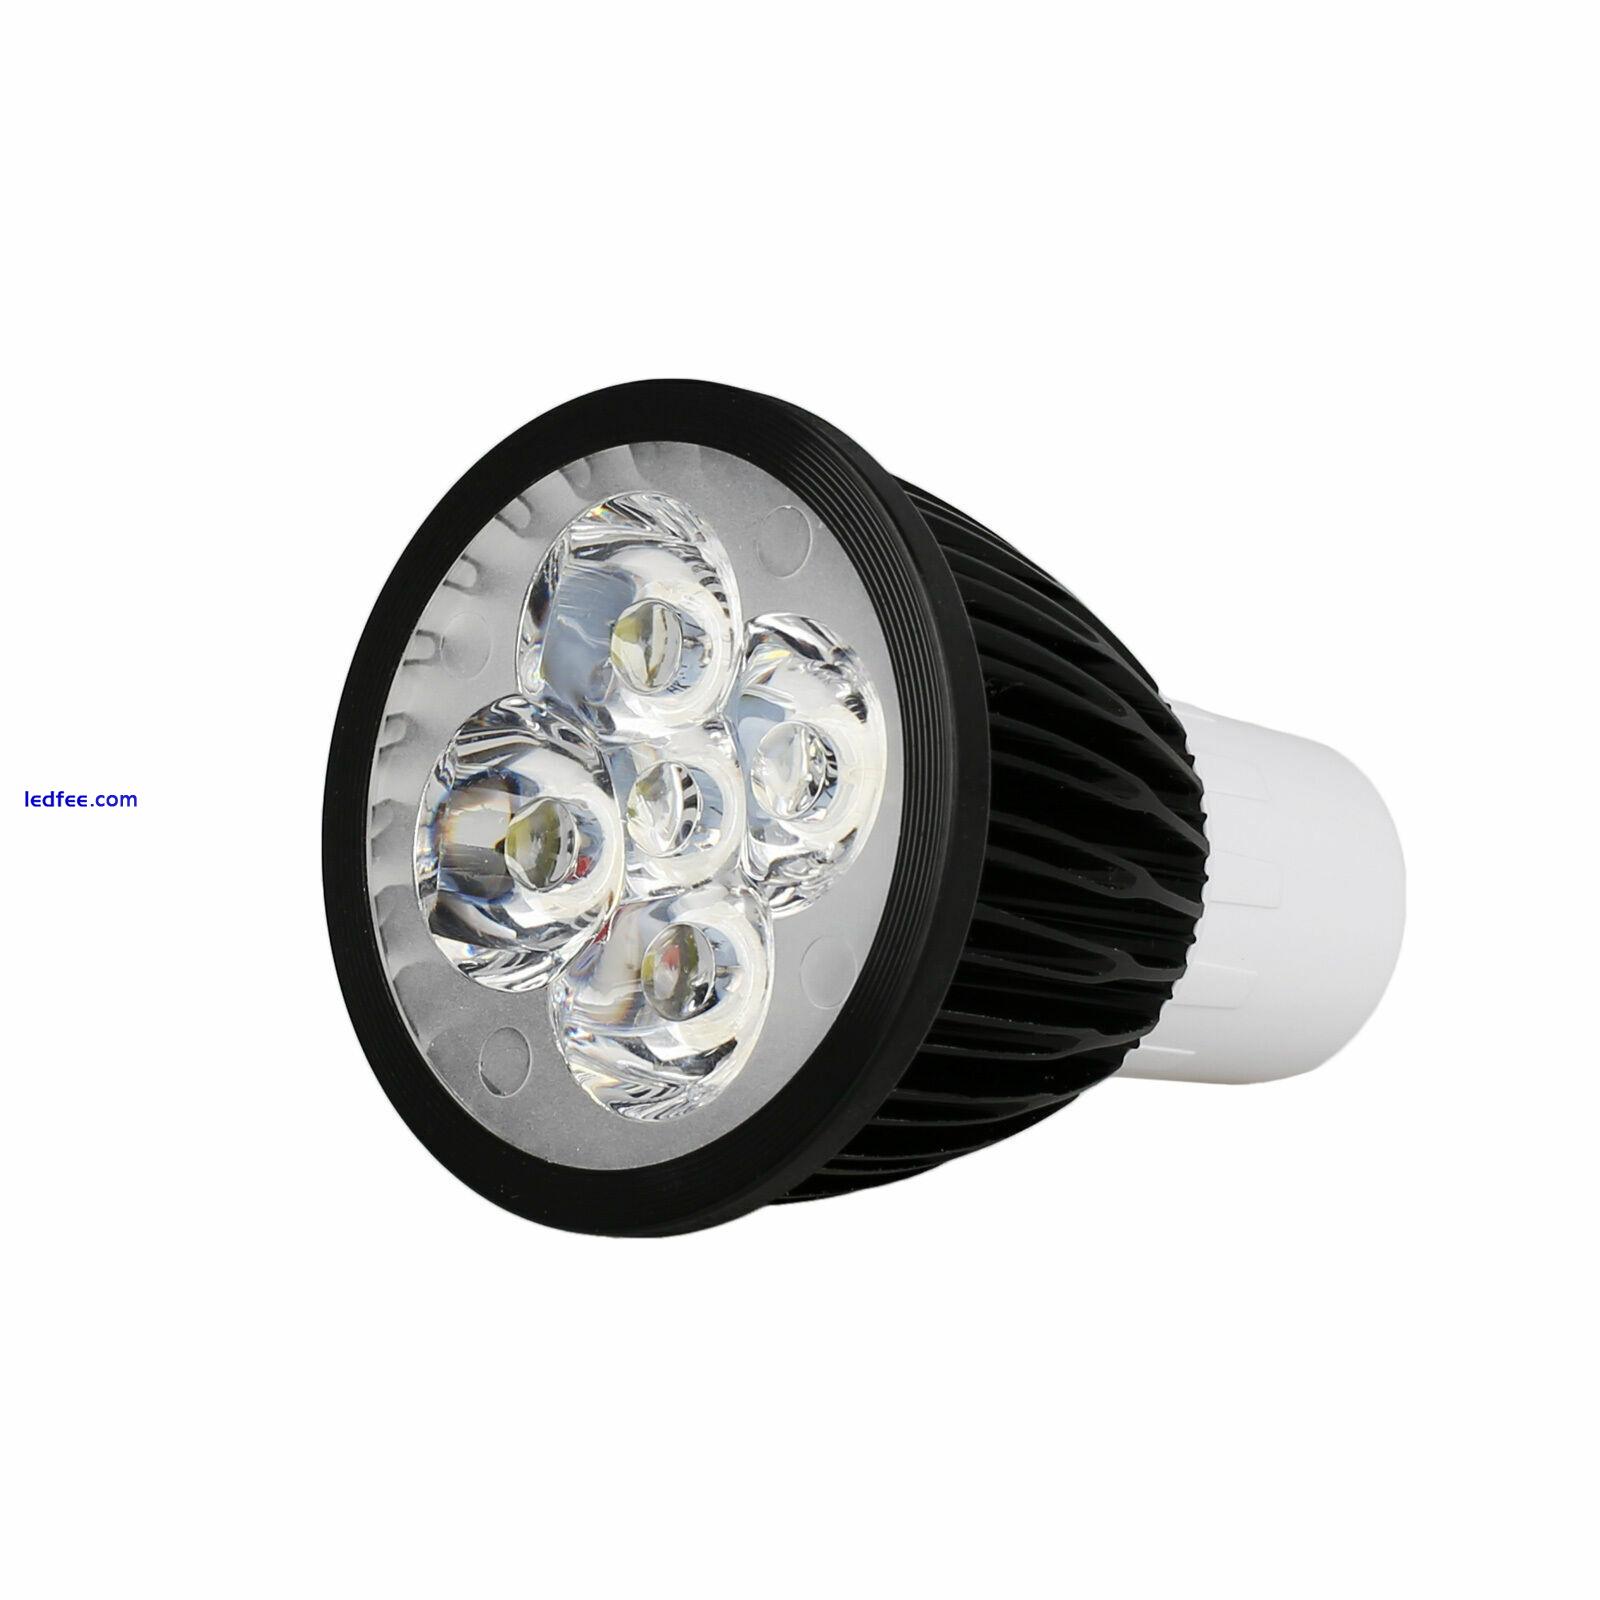 Dimmable E27 LED SpotLight Bulbs GU10 MR16 E14 GU5.3 9W 12W 15W Lamp 220V 12V BC 1 